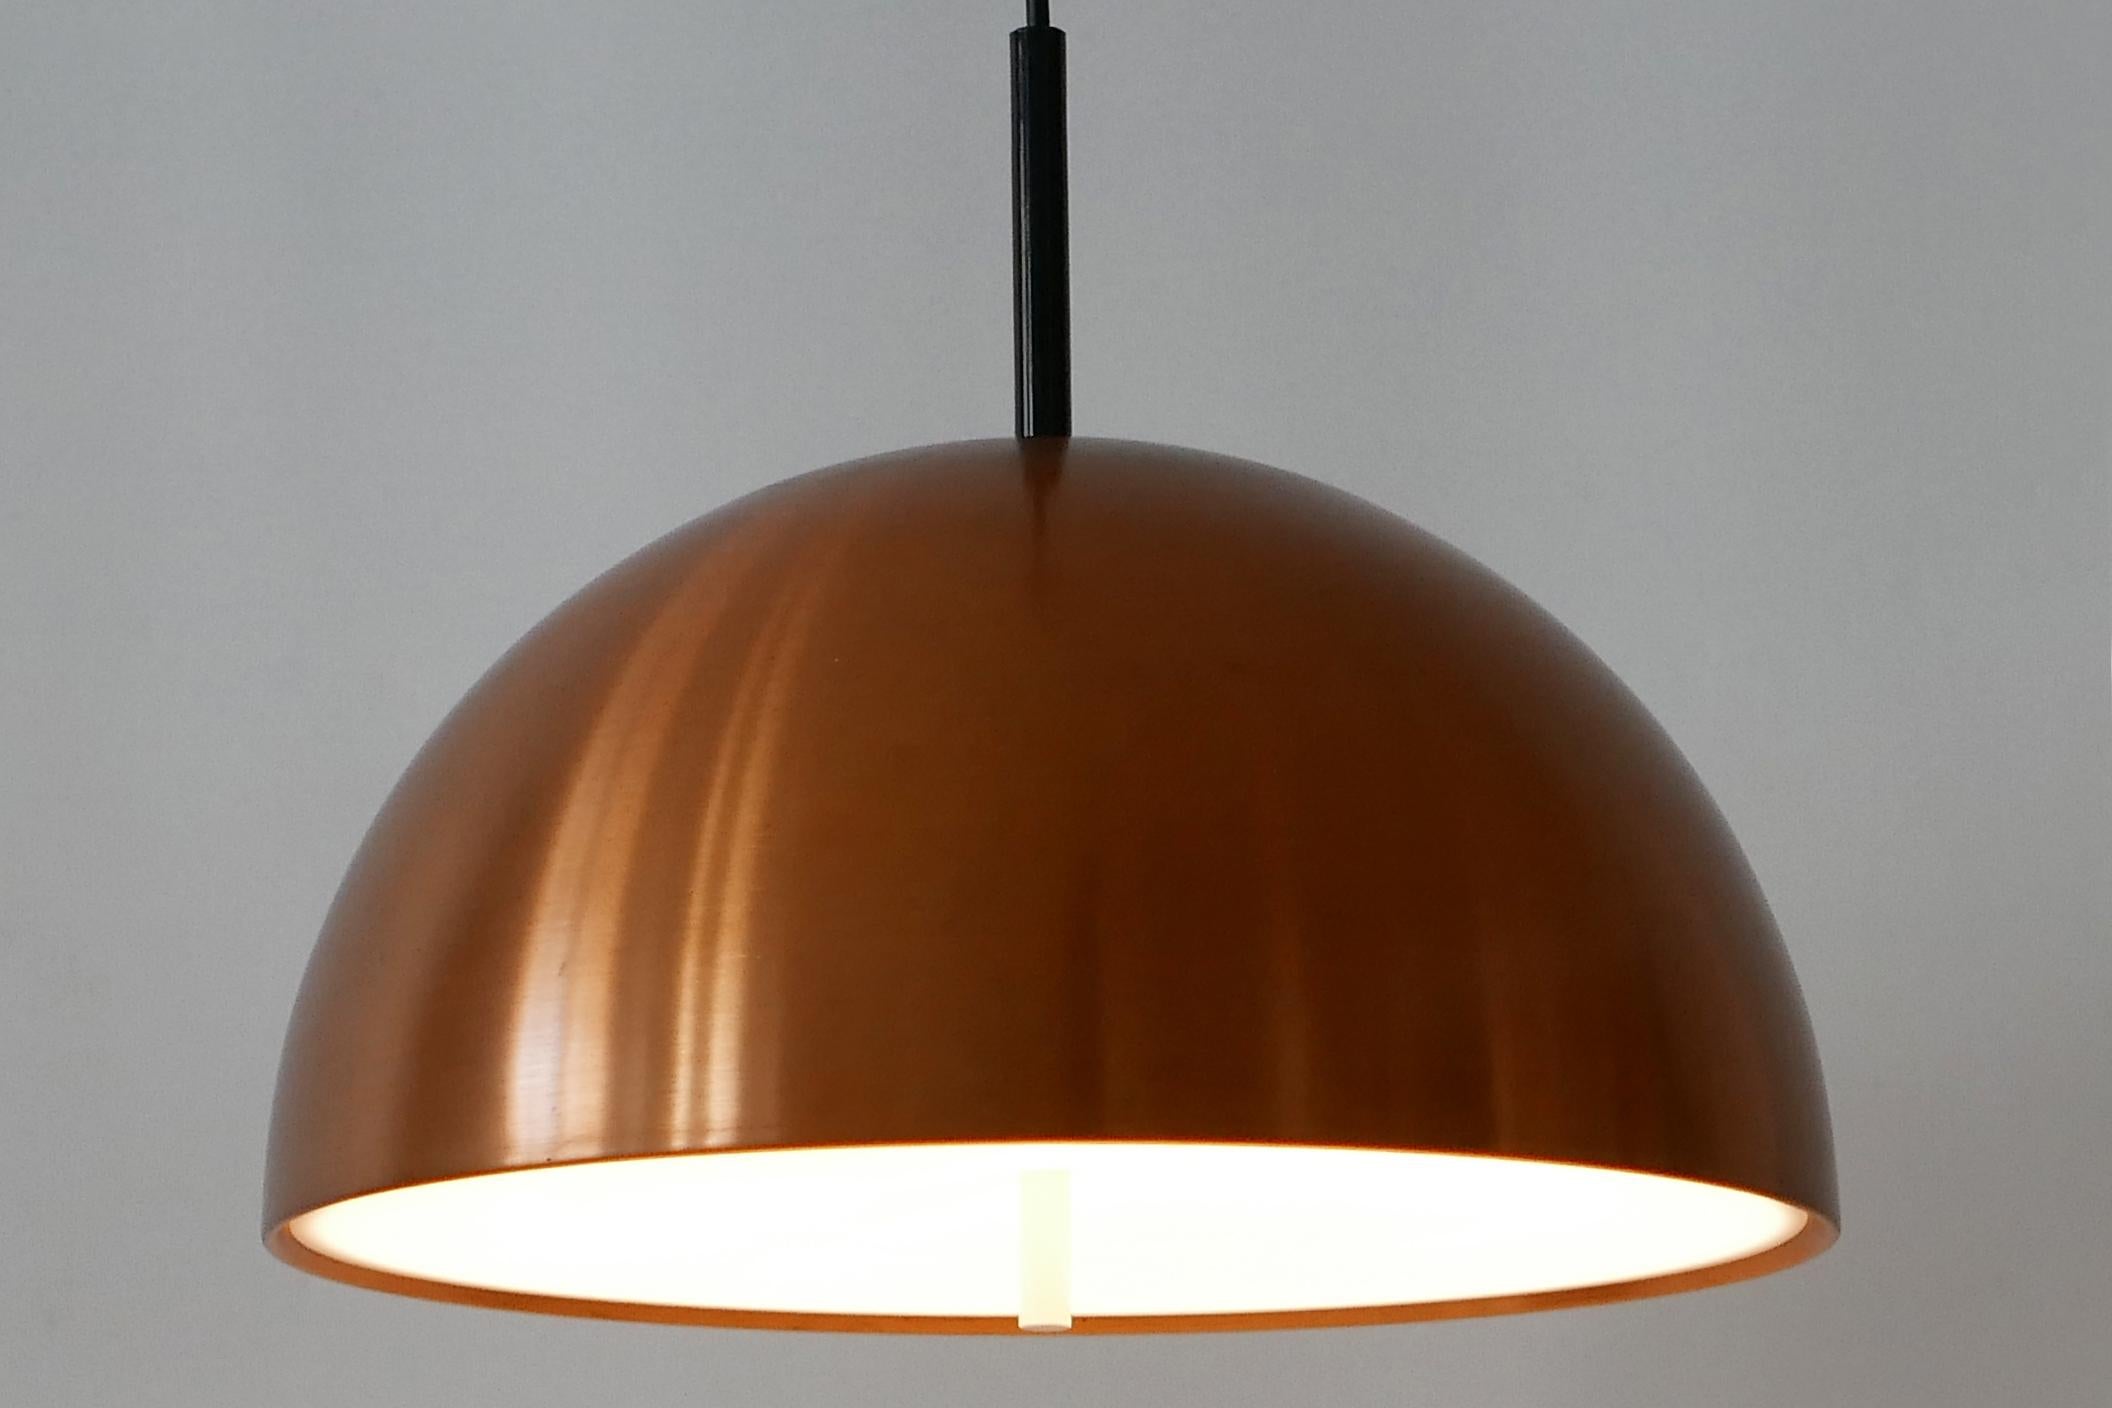 Elegant Mid-Century Modern Copper Pendant Lamp by Staff & Schwarz 1960s, Germany For Sale 7